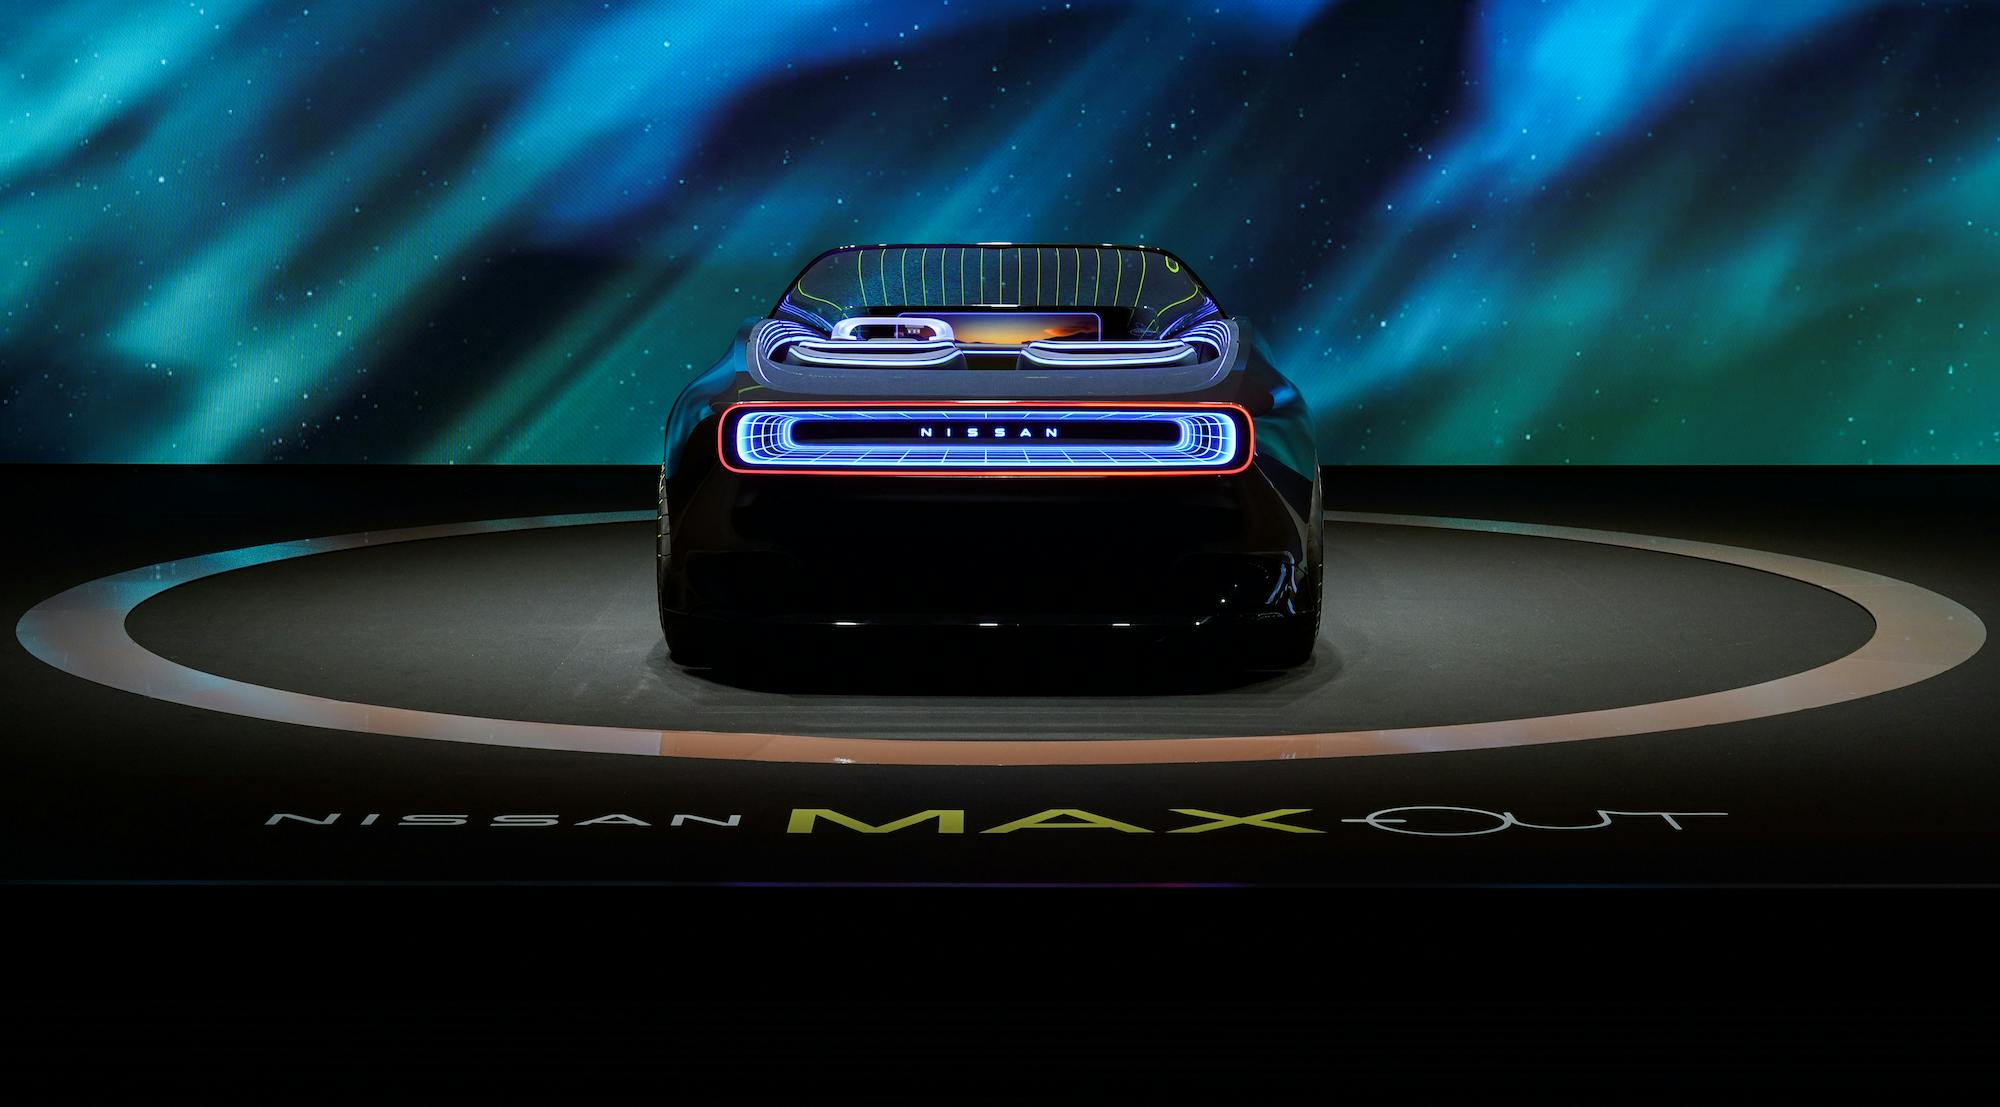 Nissan Max-Out Futuristic Concept Car rear